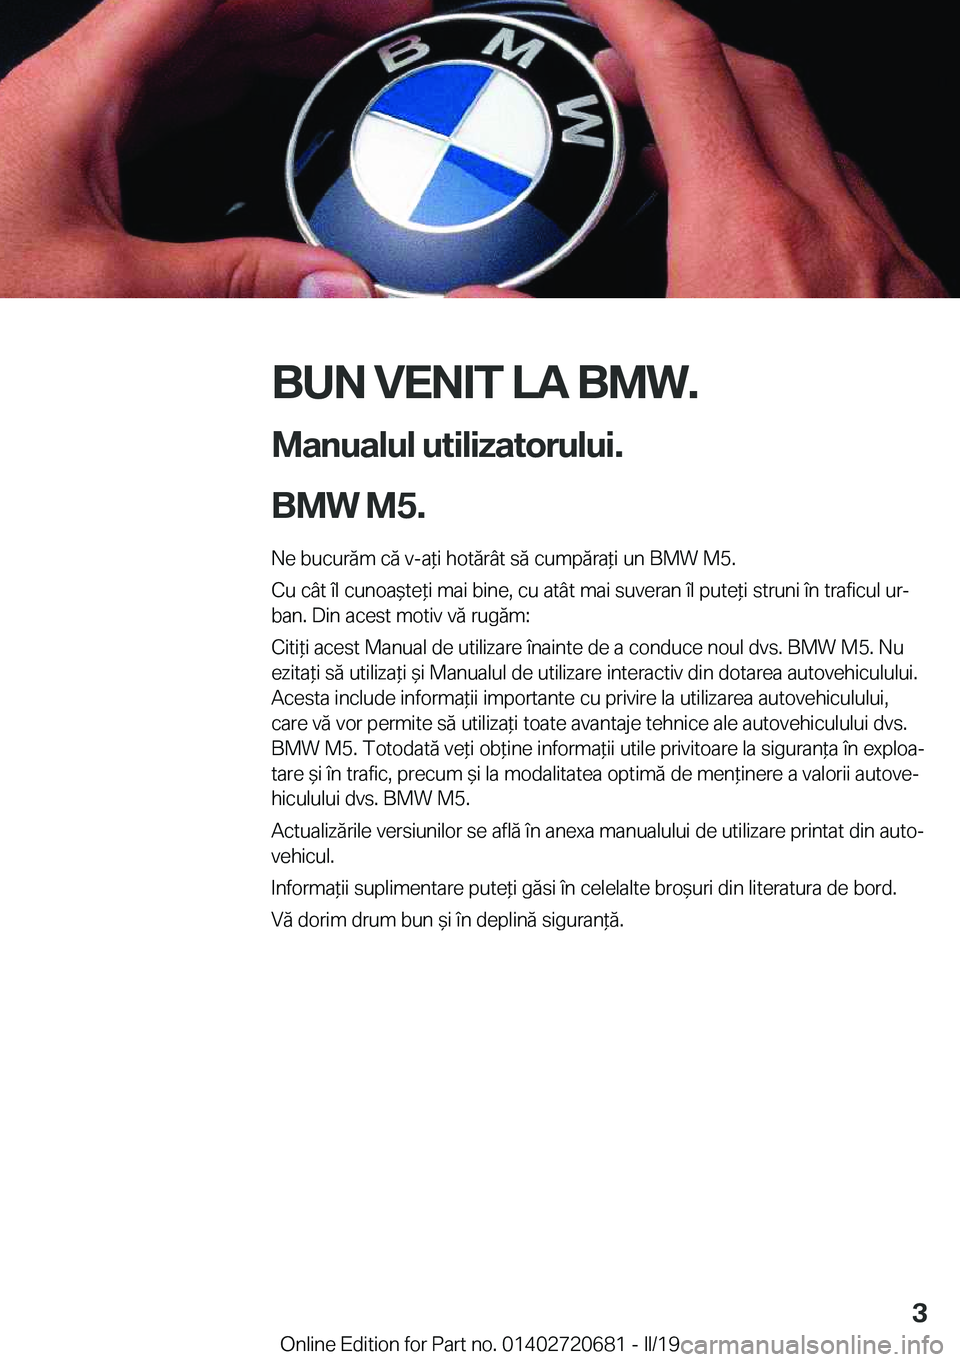 BMW M5 2019  Ghiduri De Utilizare (in Romanian) �B�U�N��V�E�N�I�T��L�A��B�M�W�.�M�a�n�u�a�l�u�l��u�t�i�l�i�z�a�t�o�r�u�l�u�i�.
�B�M�W��M�5�. �N�e��b�u�c�u�r�